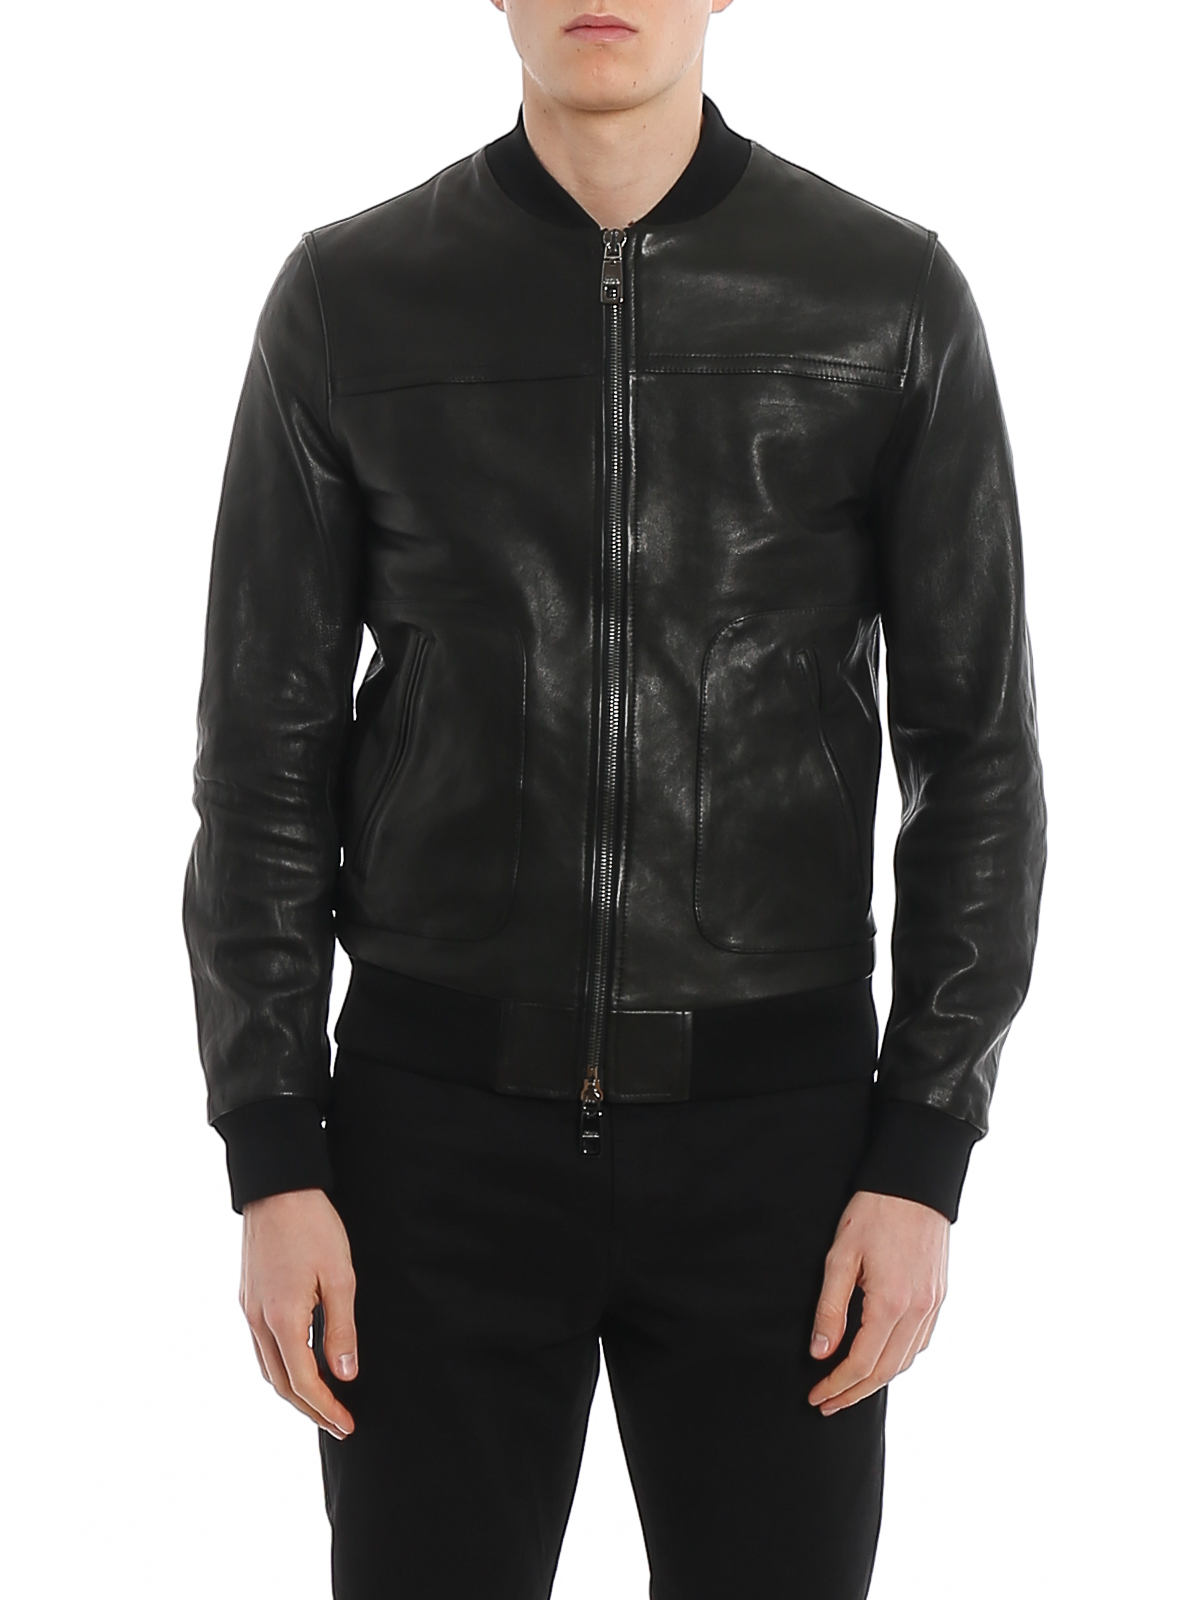 Leather jacket Dolce & Gabbana - Leather bomber jacket - G9RM6LHULF9N0000